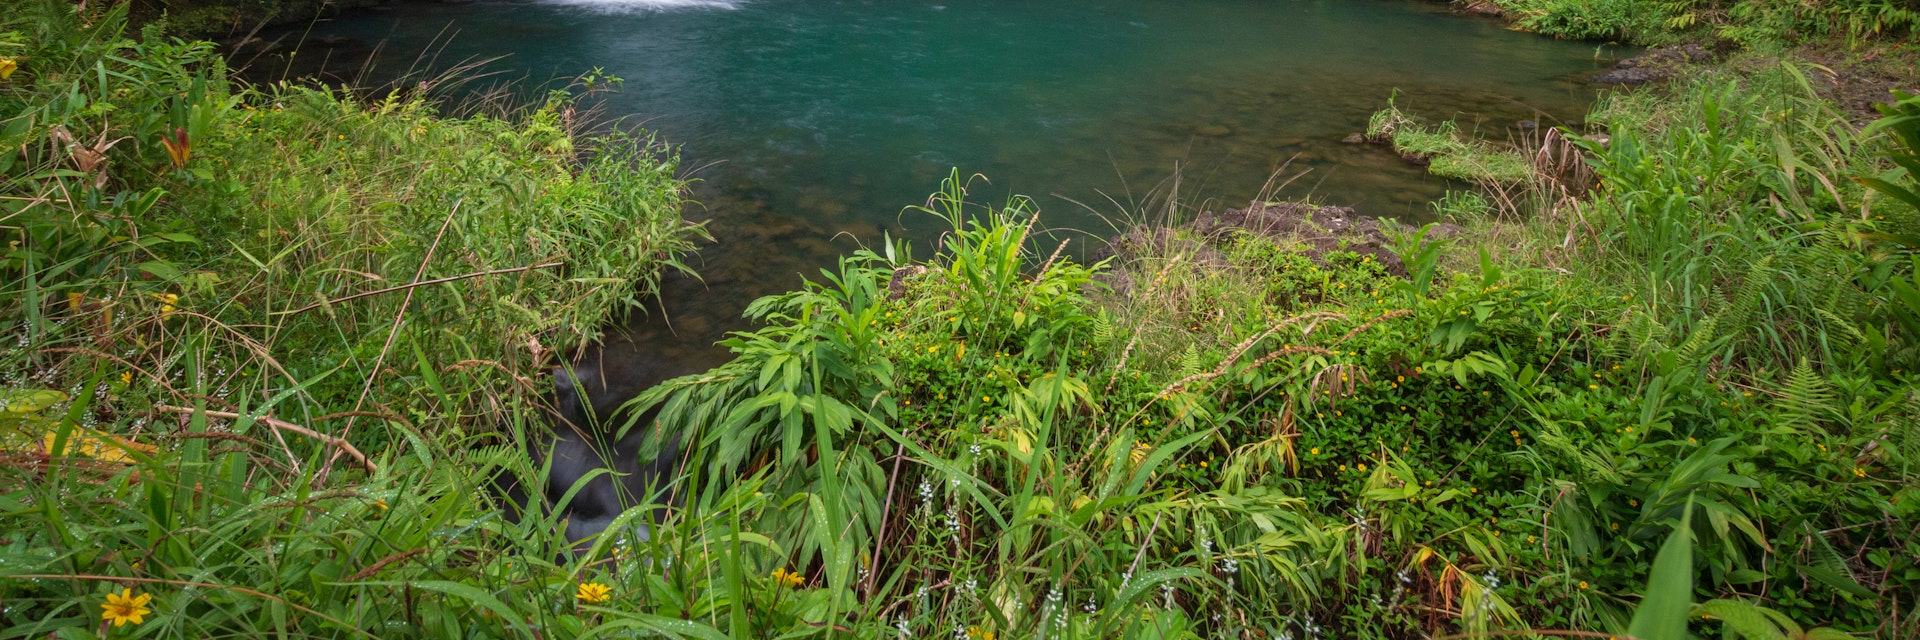 Pua'a Ka'a Falls on the island of Maui at Mile 22 along the Road to Hana.